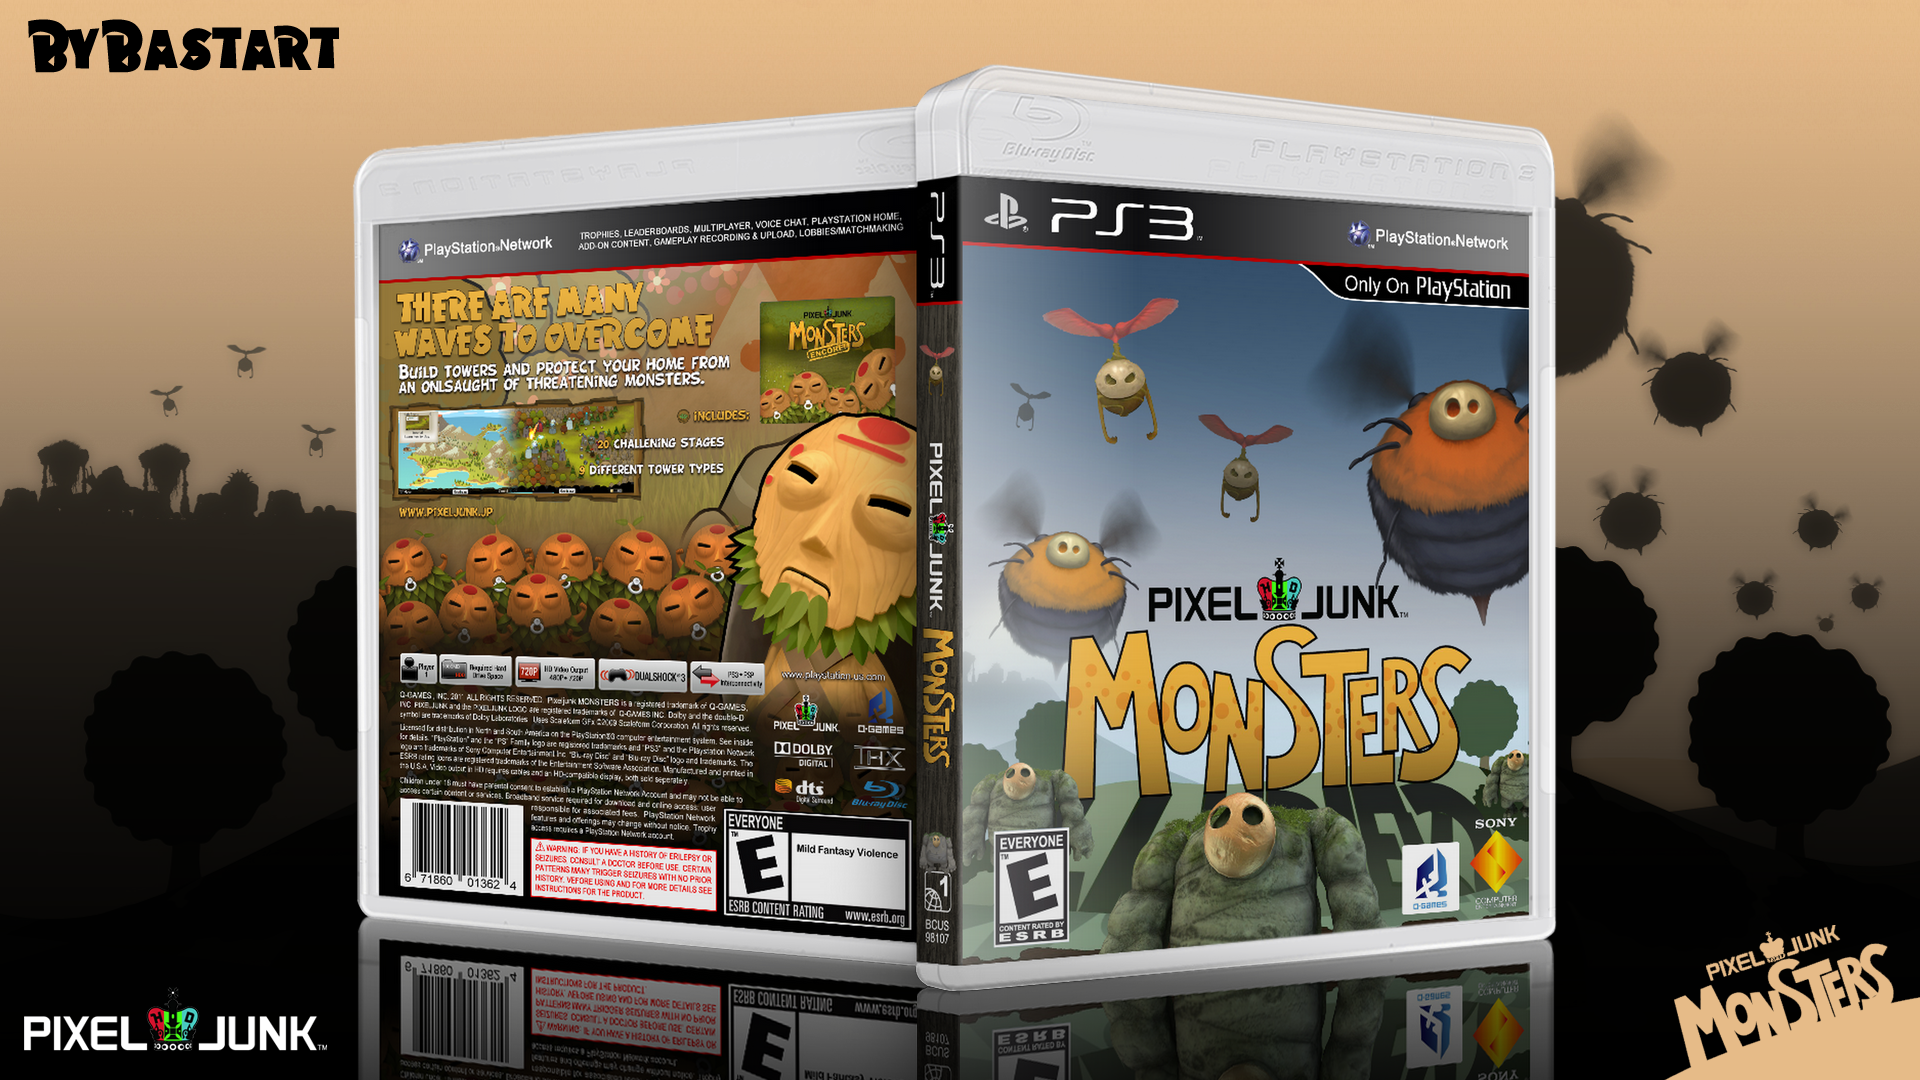 Pixeljunk: Monsters box cover